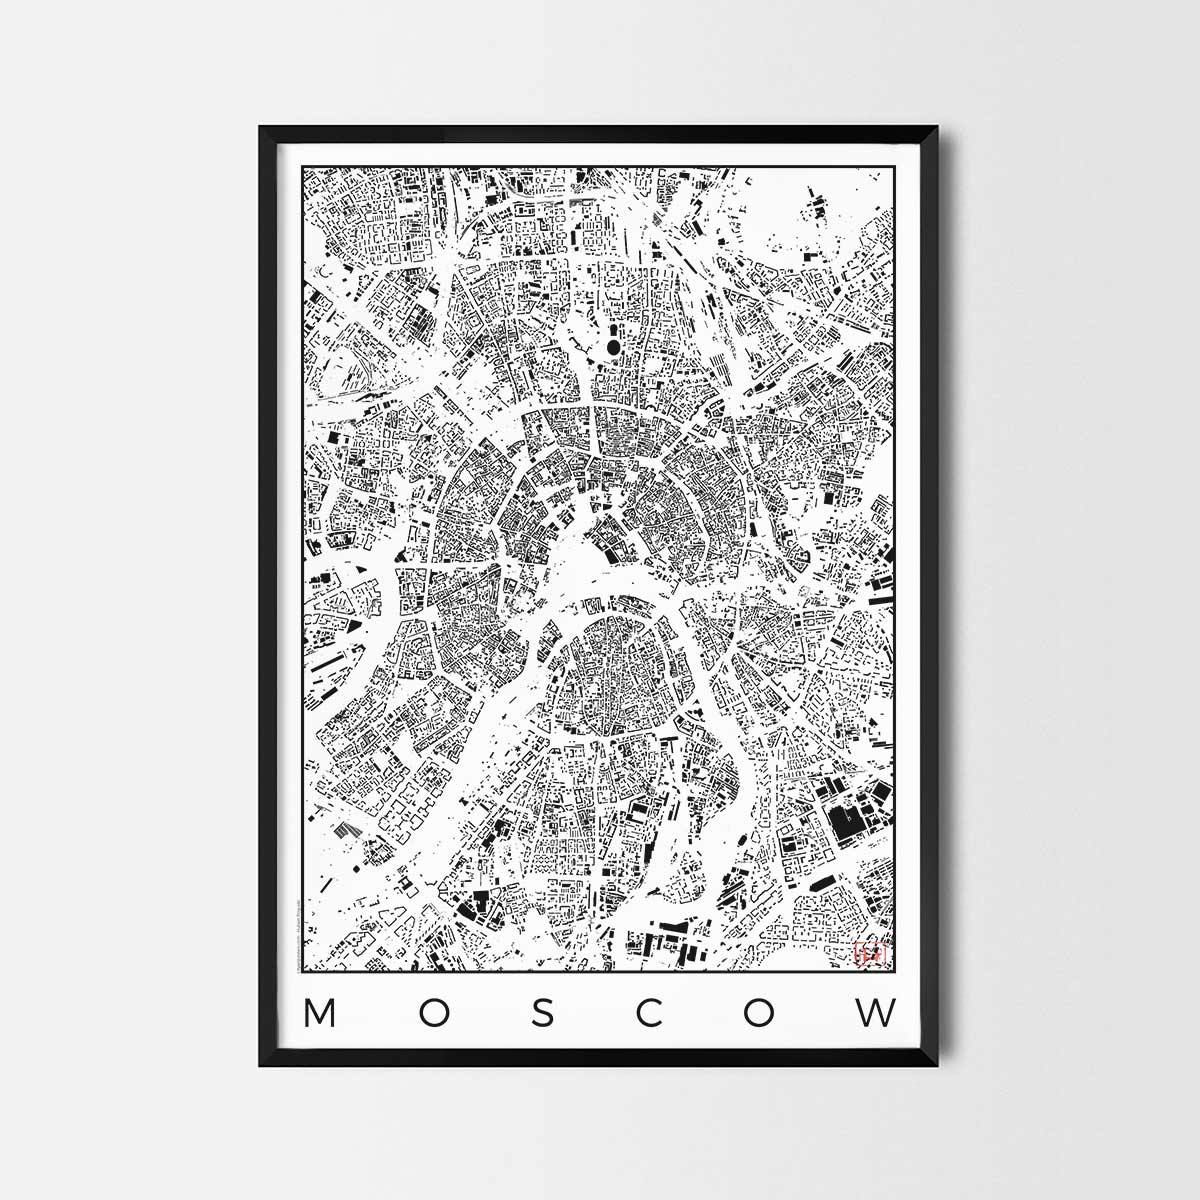 Moscow Map Poster schwarzplan Urban plan city map art posters map posters city art prints city posters